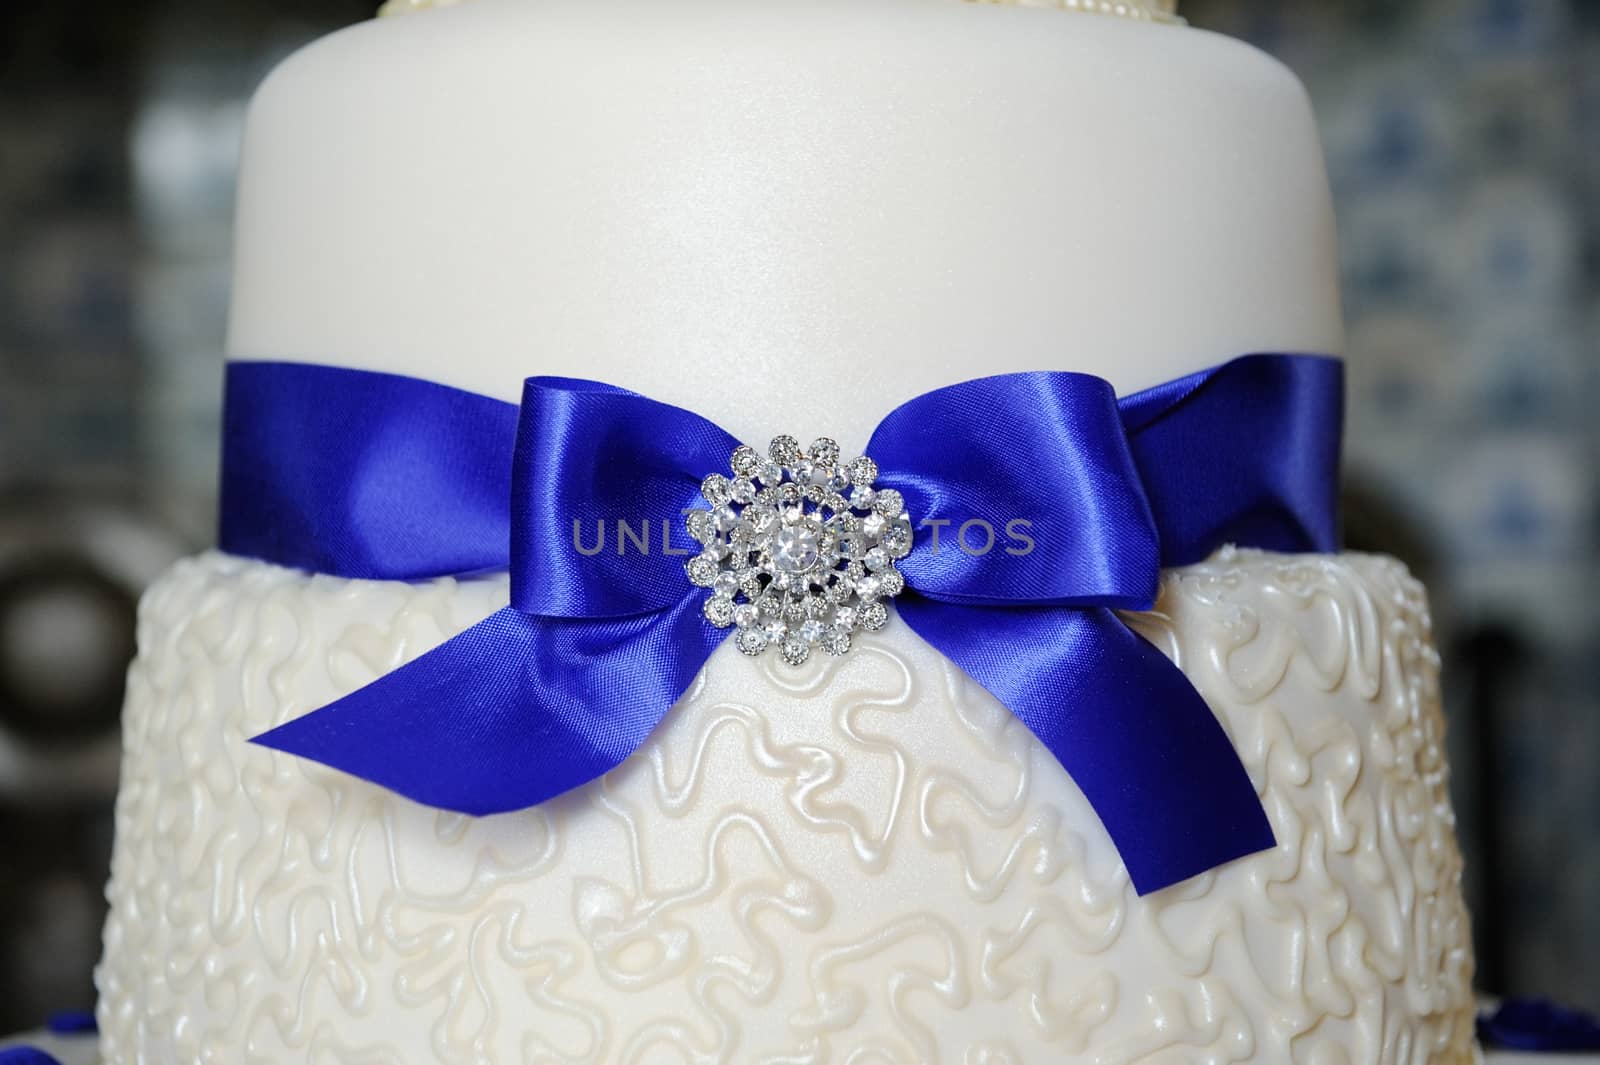 Blue ribbon decorates wedding cake at reception